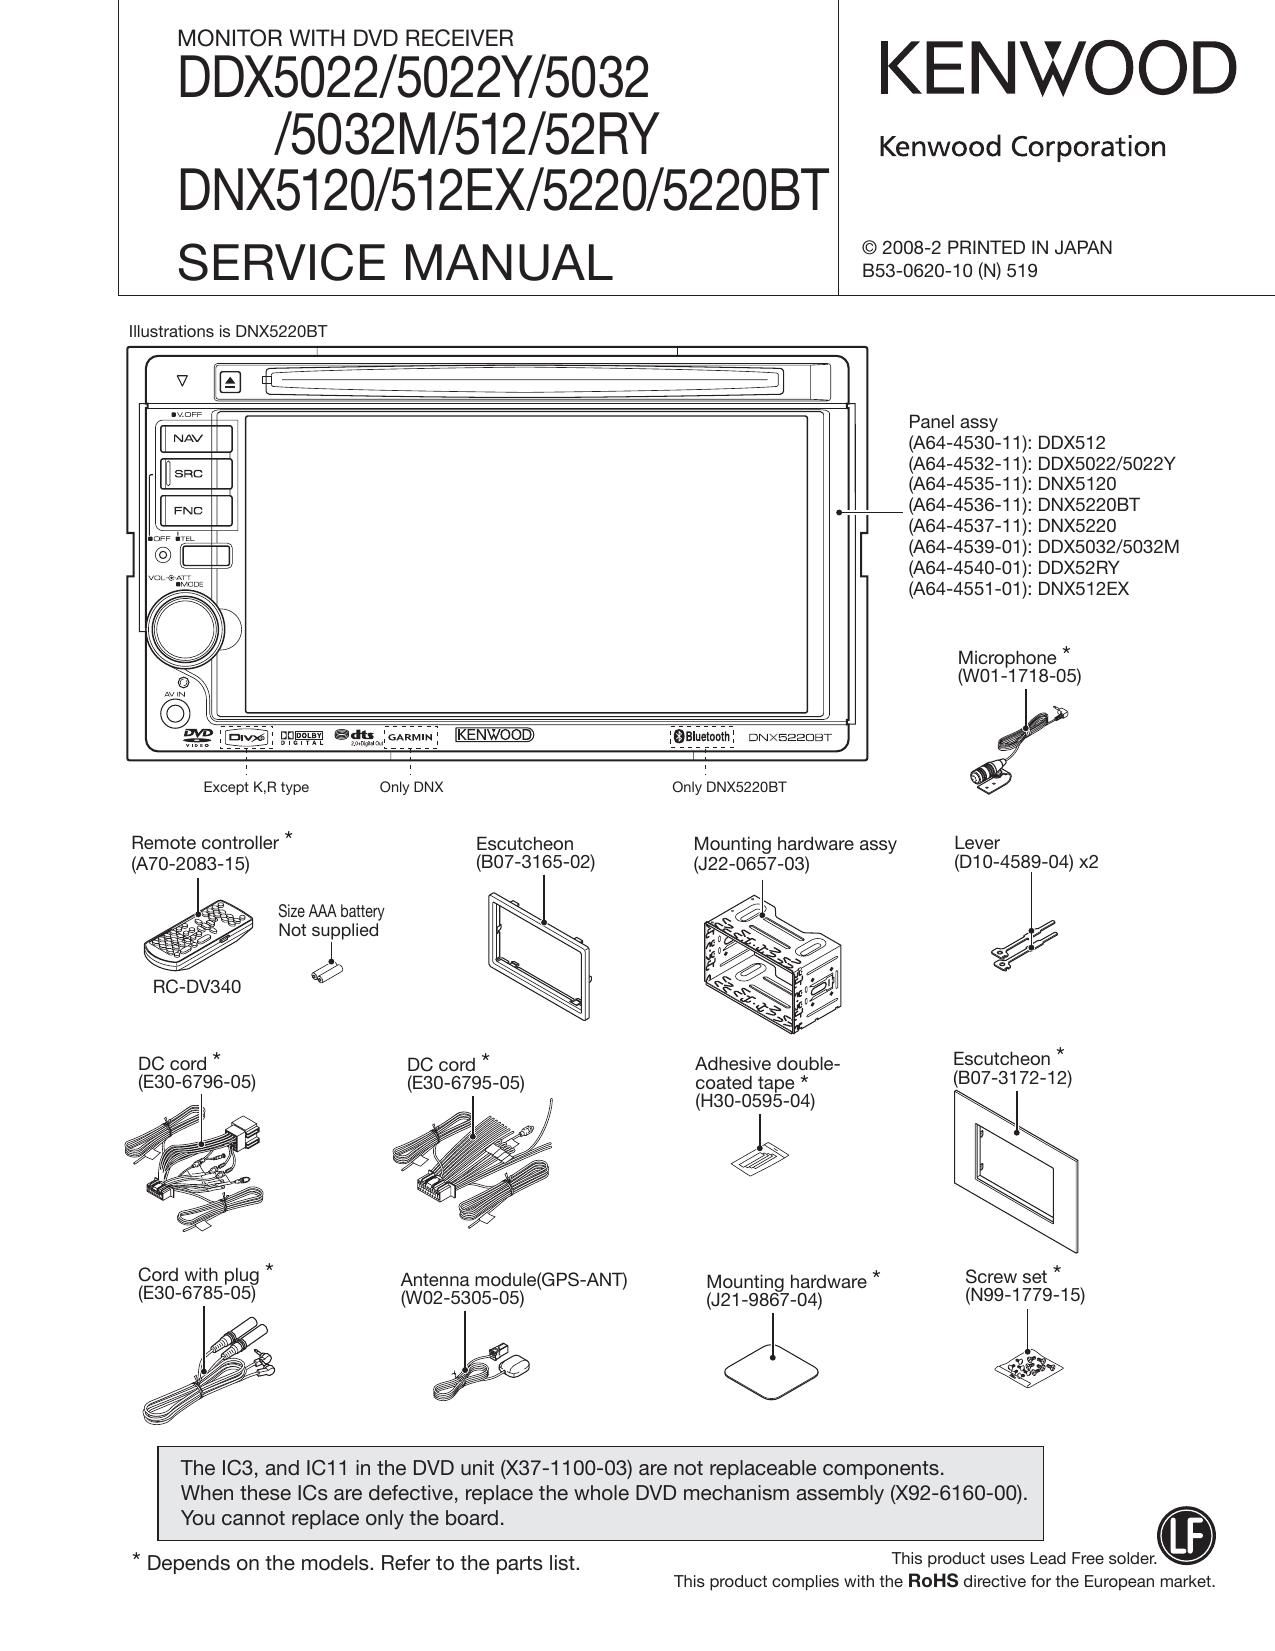 Kenwood DDX 52 RY HU Service Manual